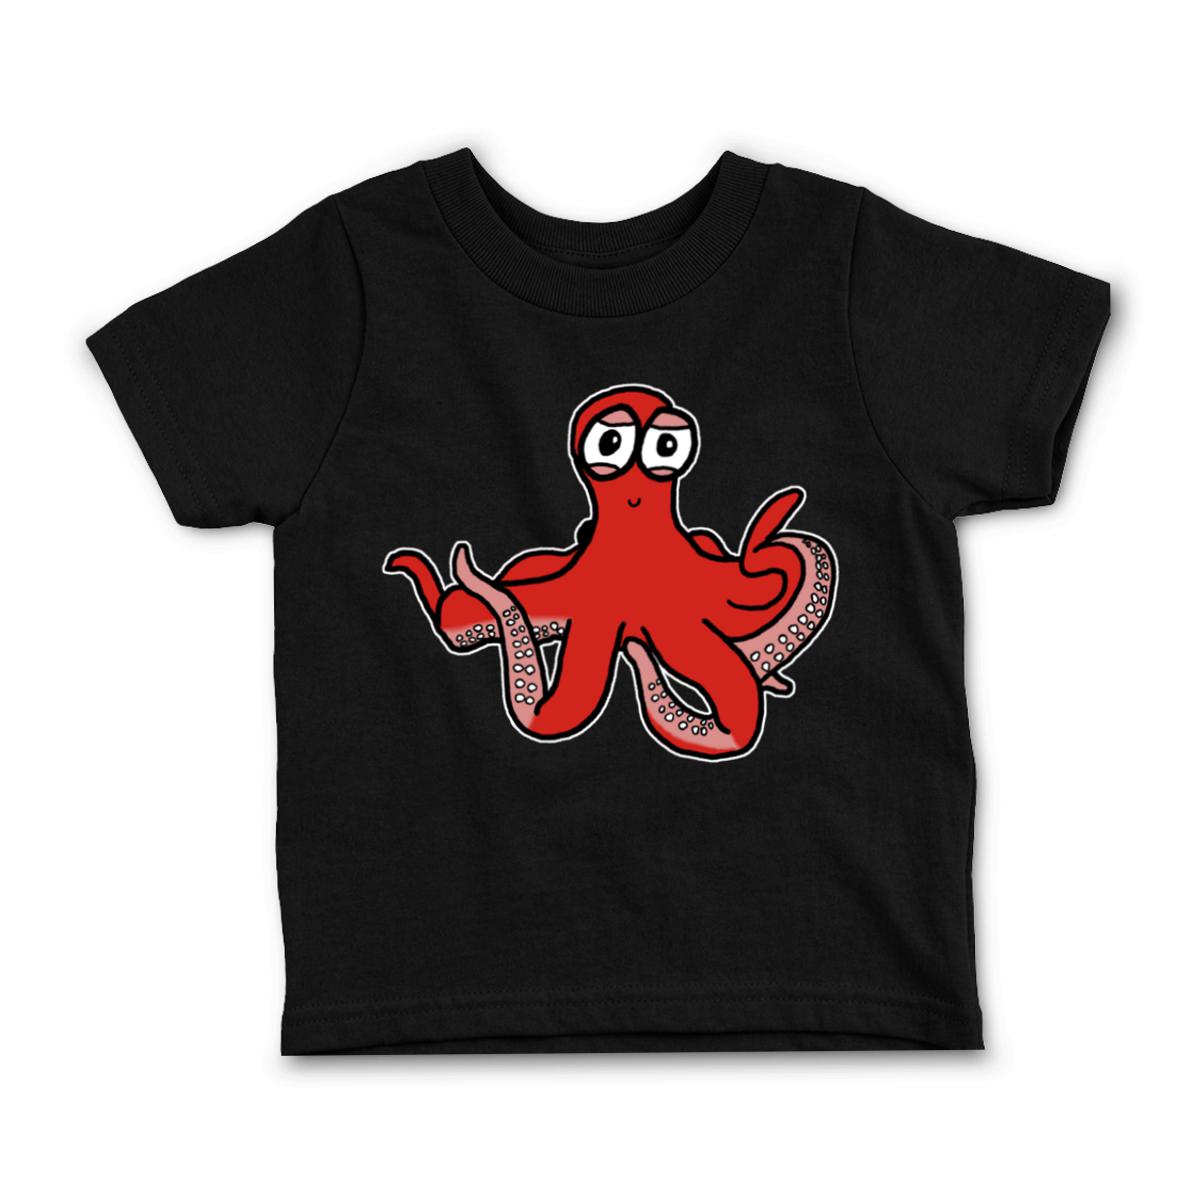 Octopus Toddler Tee 2T black